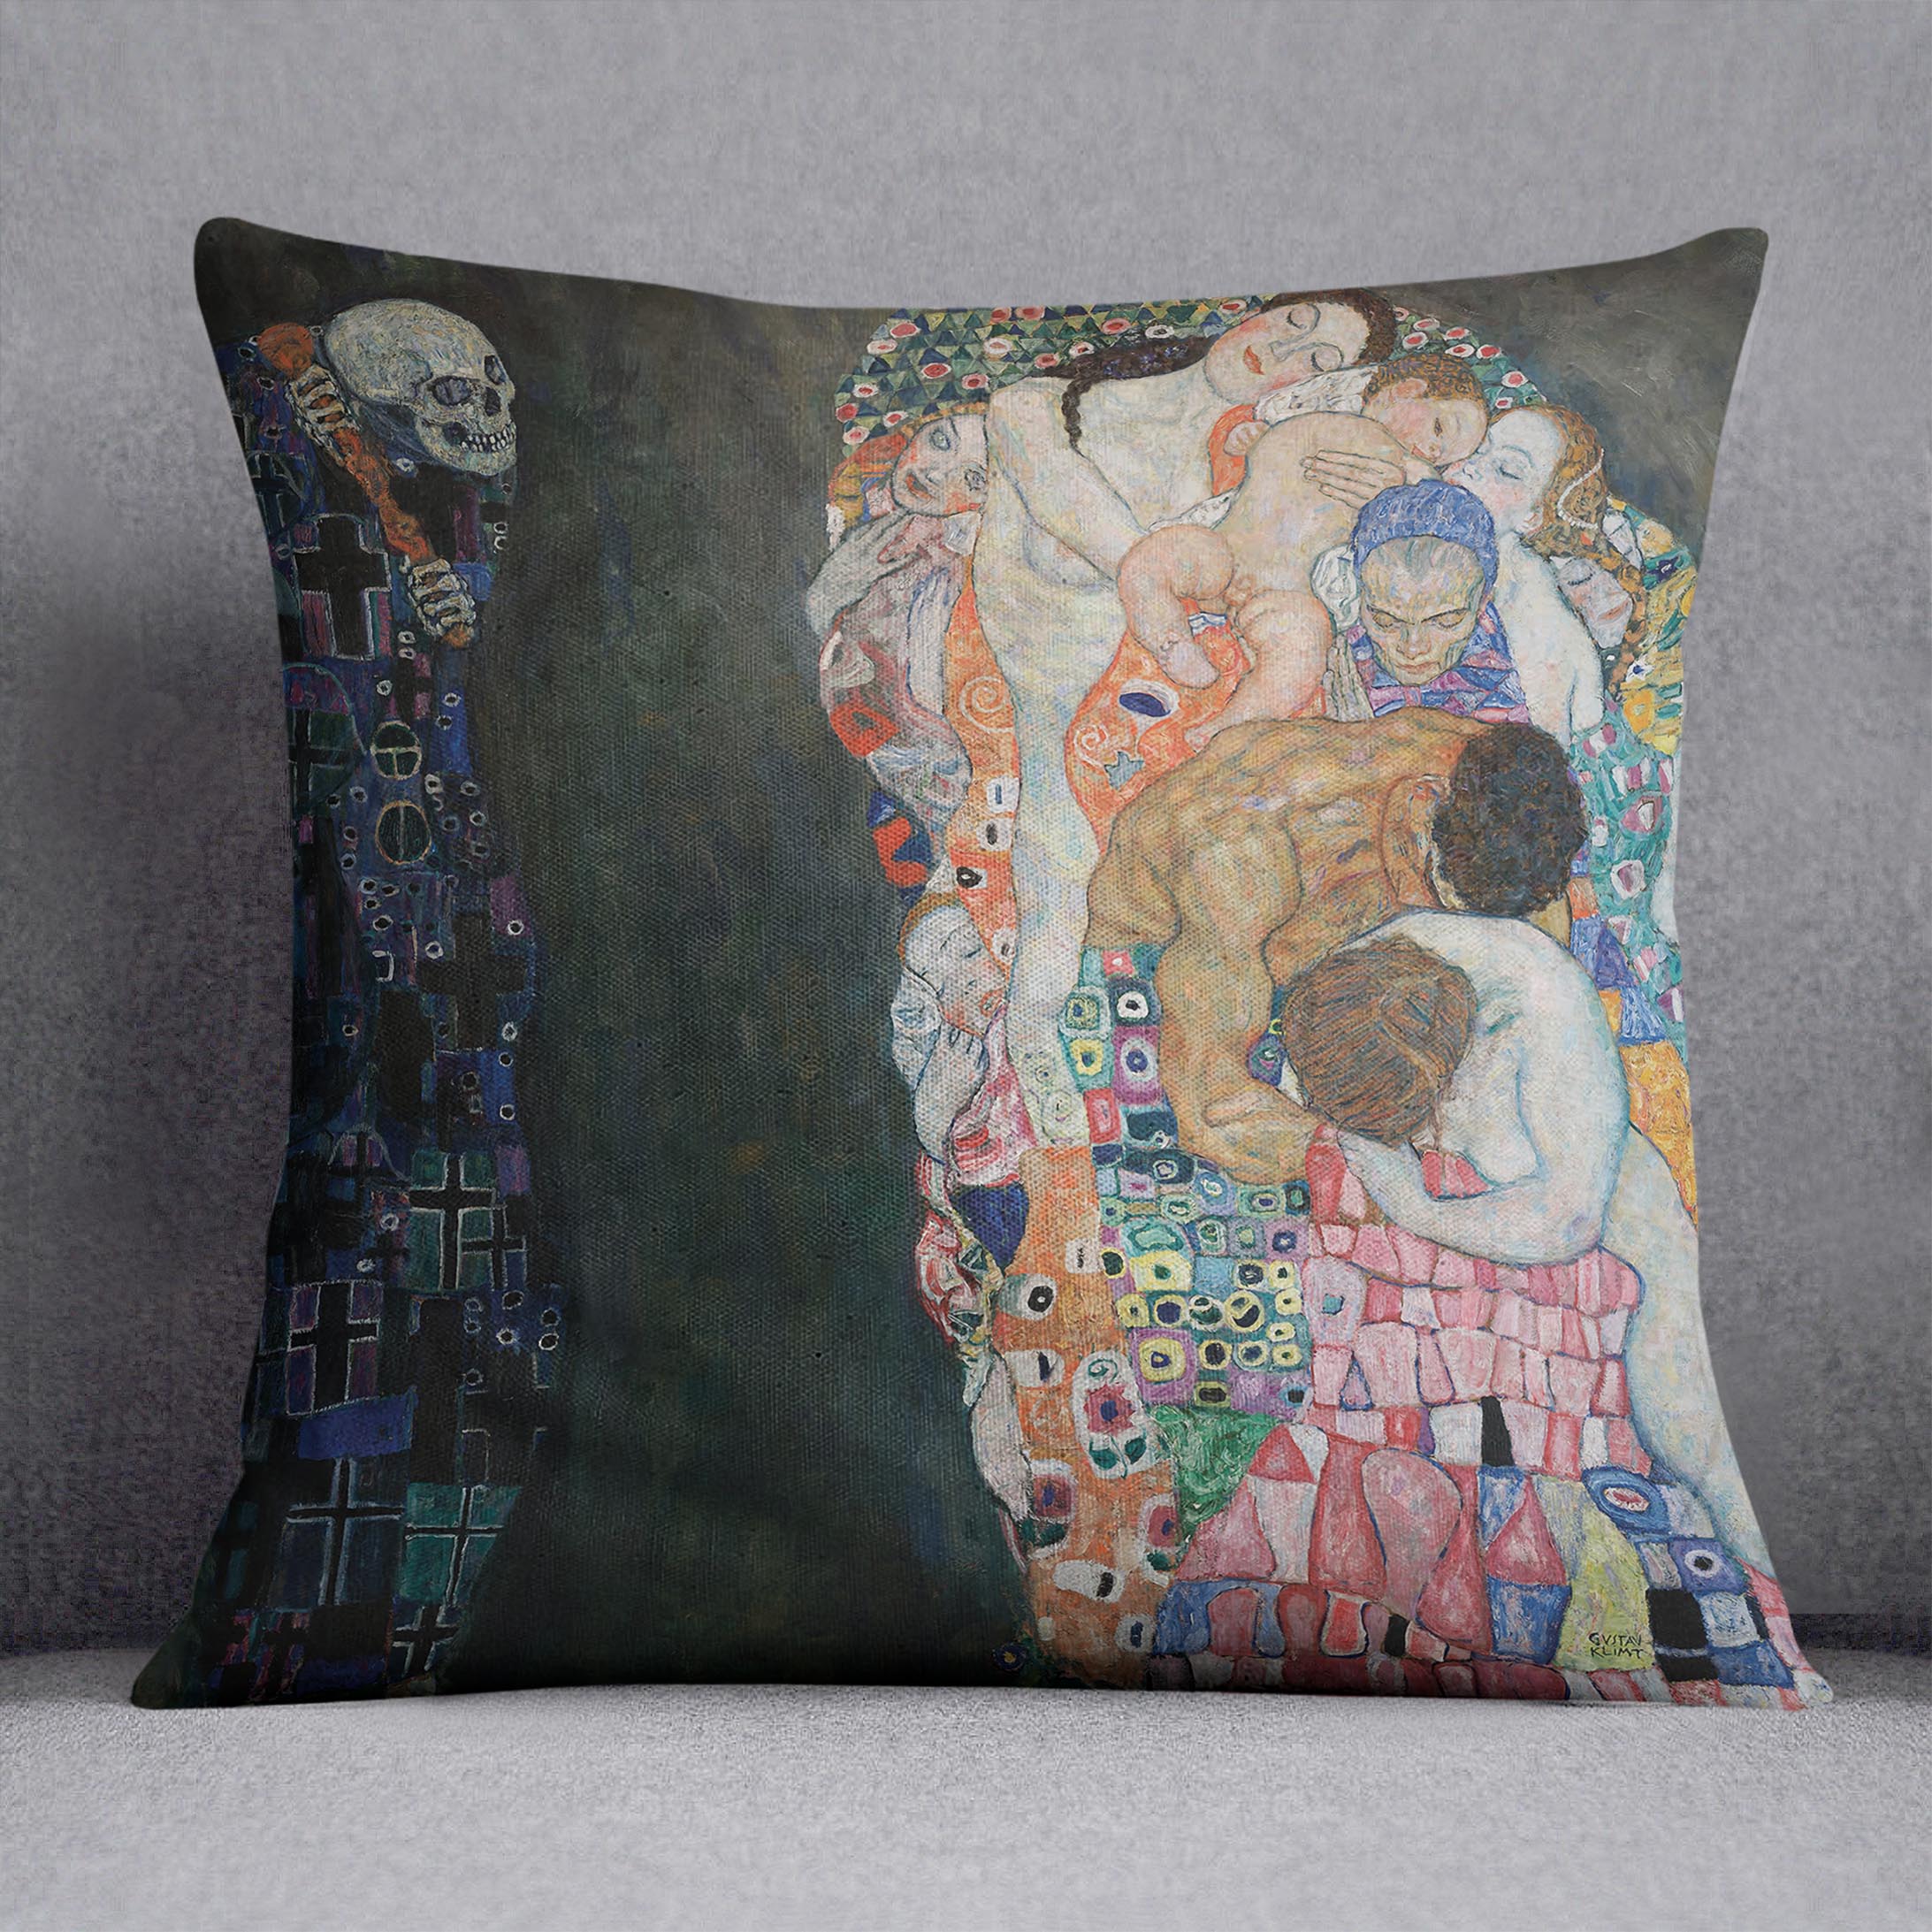 Death and Life by Klimt 2 Cushion